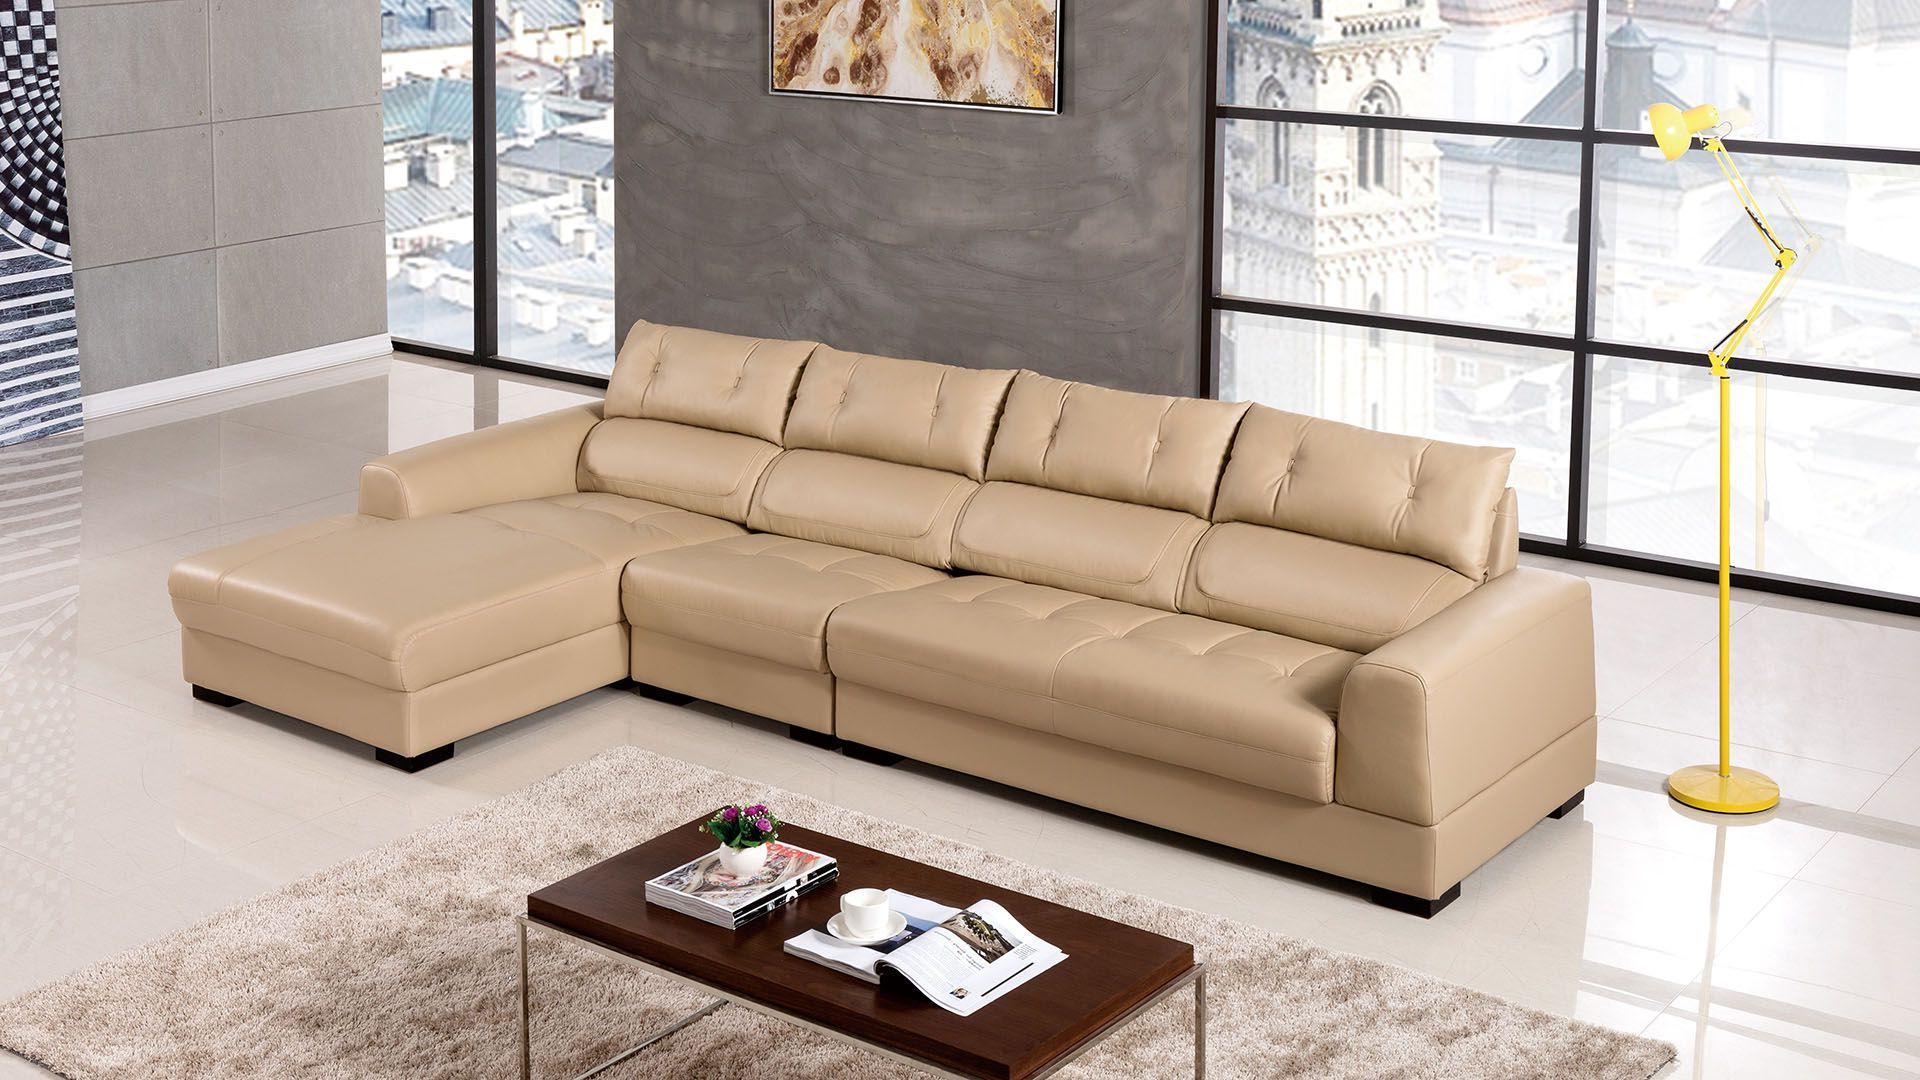 Contemporary, Modern Sectional Sofa EK-L200-LT EK-L200R-LT in Tan Top grain leather